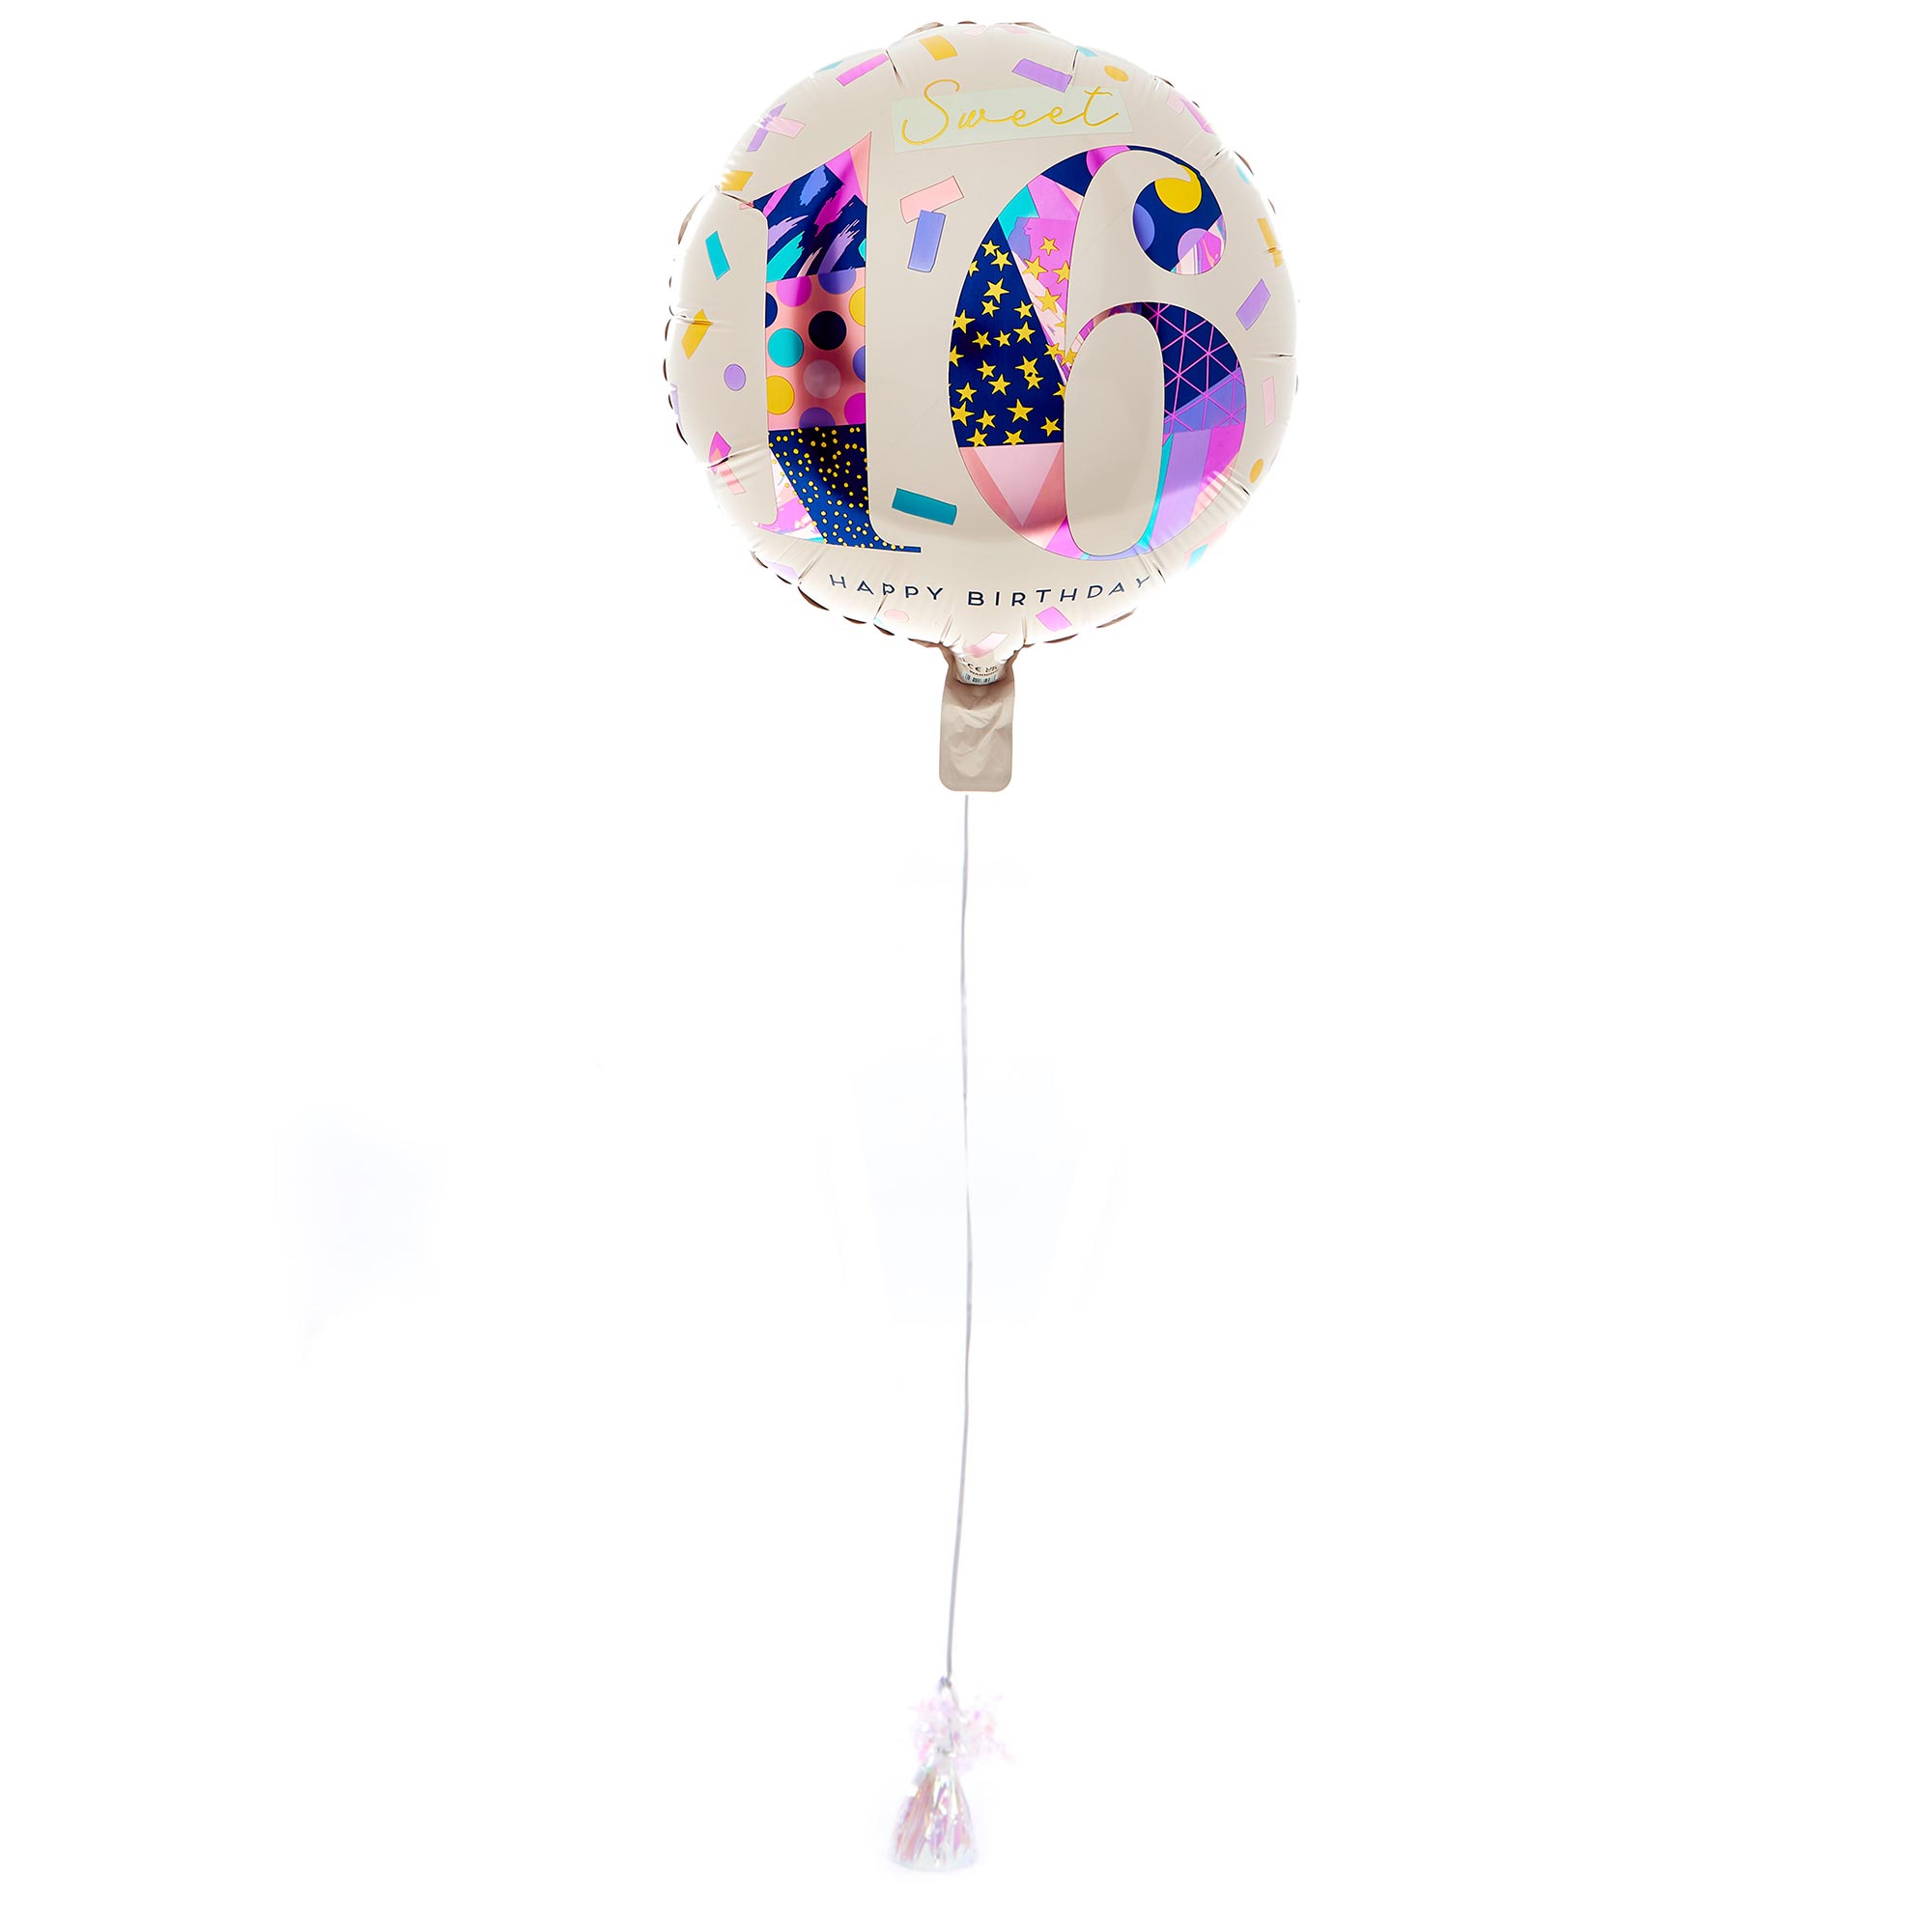 Sweet 16th Birthday Balloon & Lindt Chocolate Box - FREE GIFT CARD!